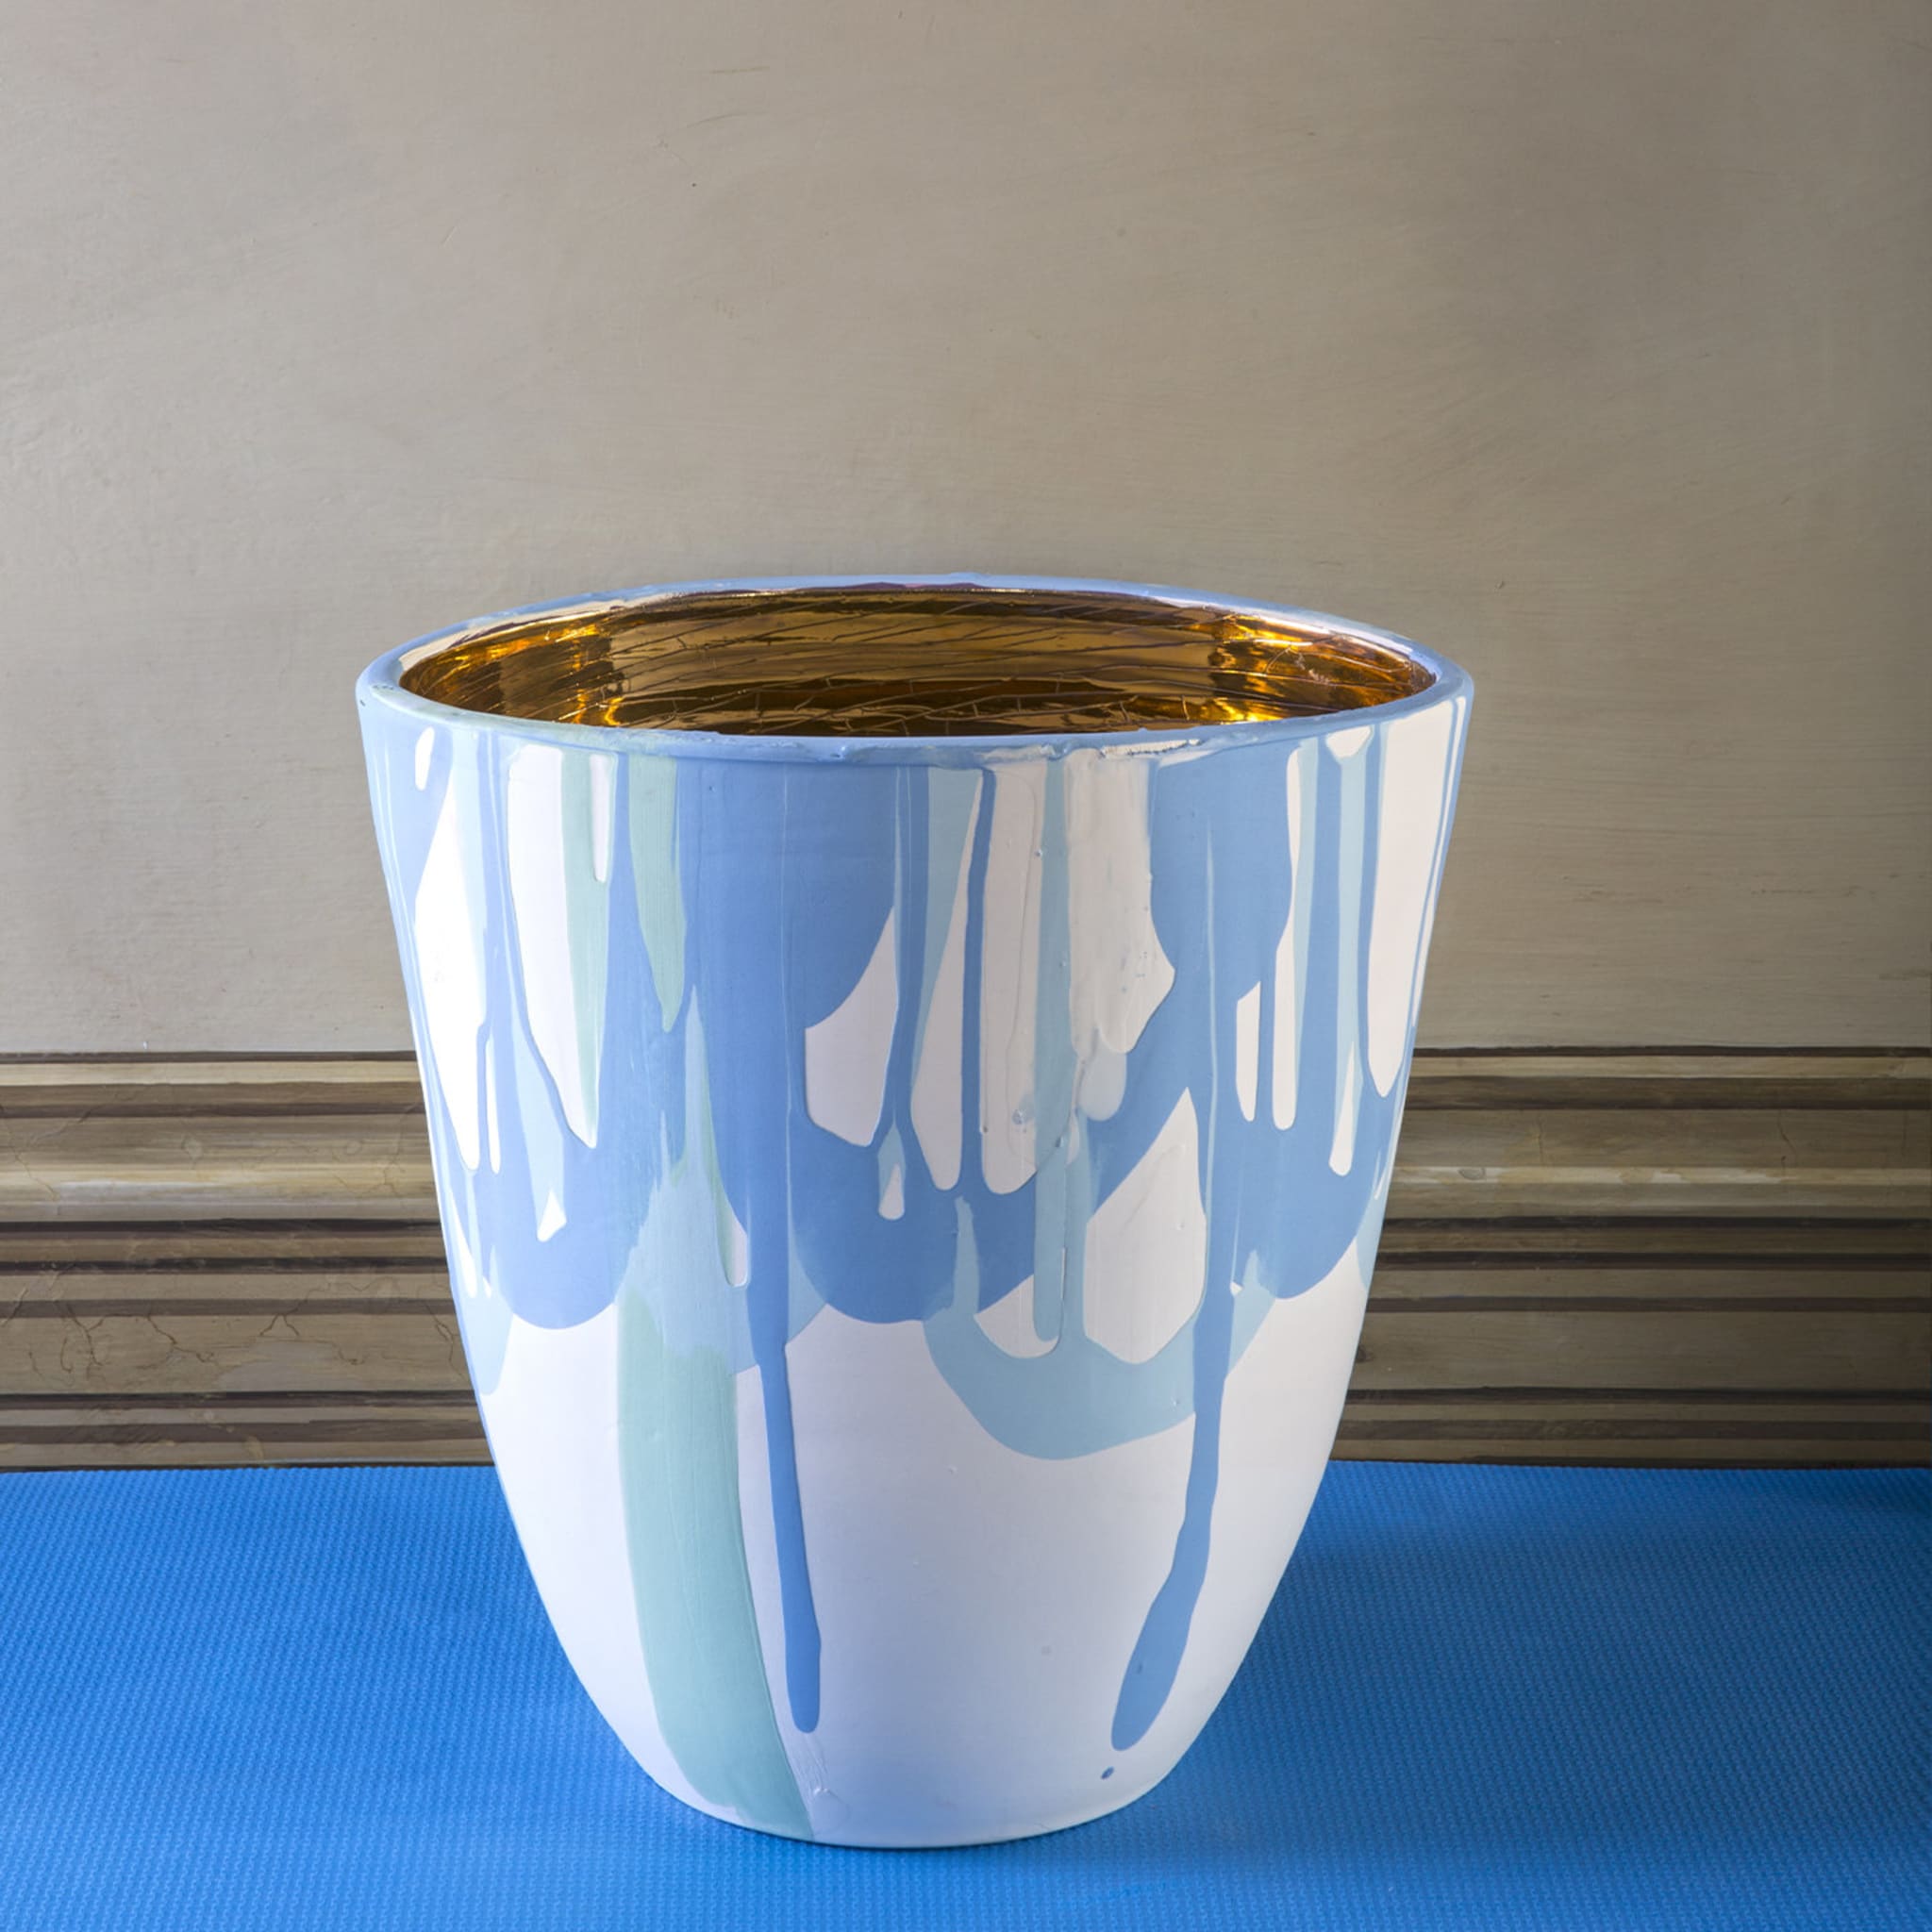 Vase bleu clair et or - Vue alternative 1